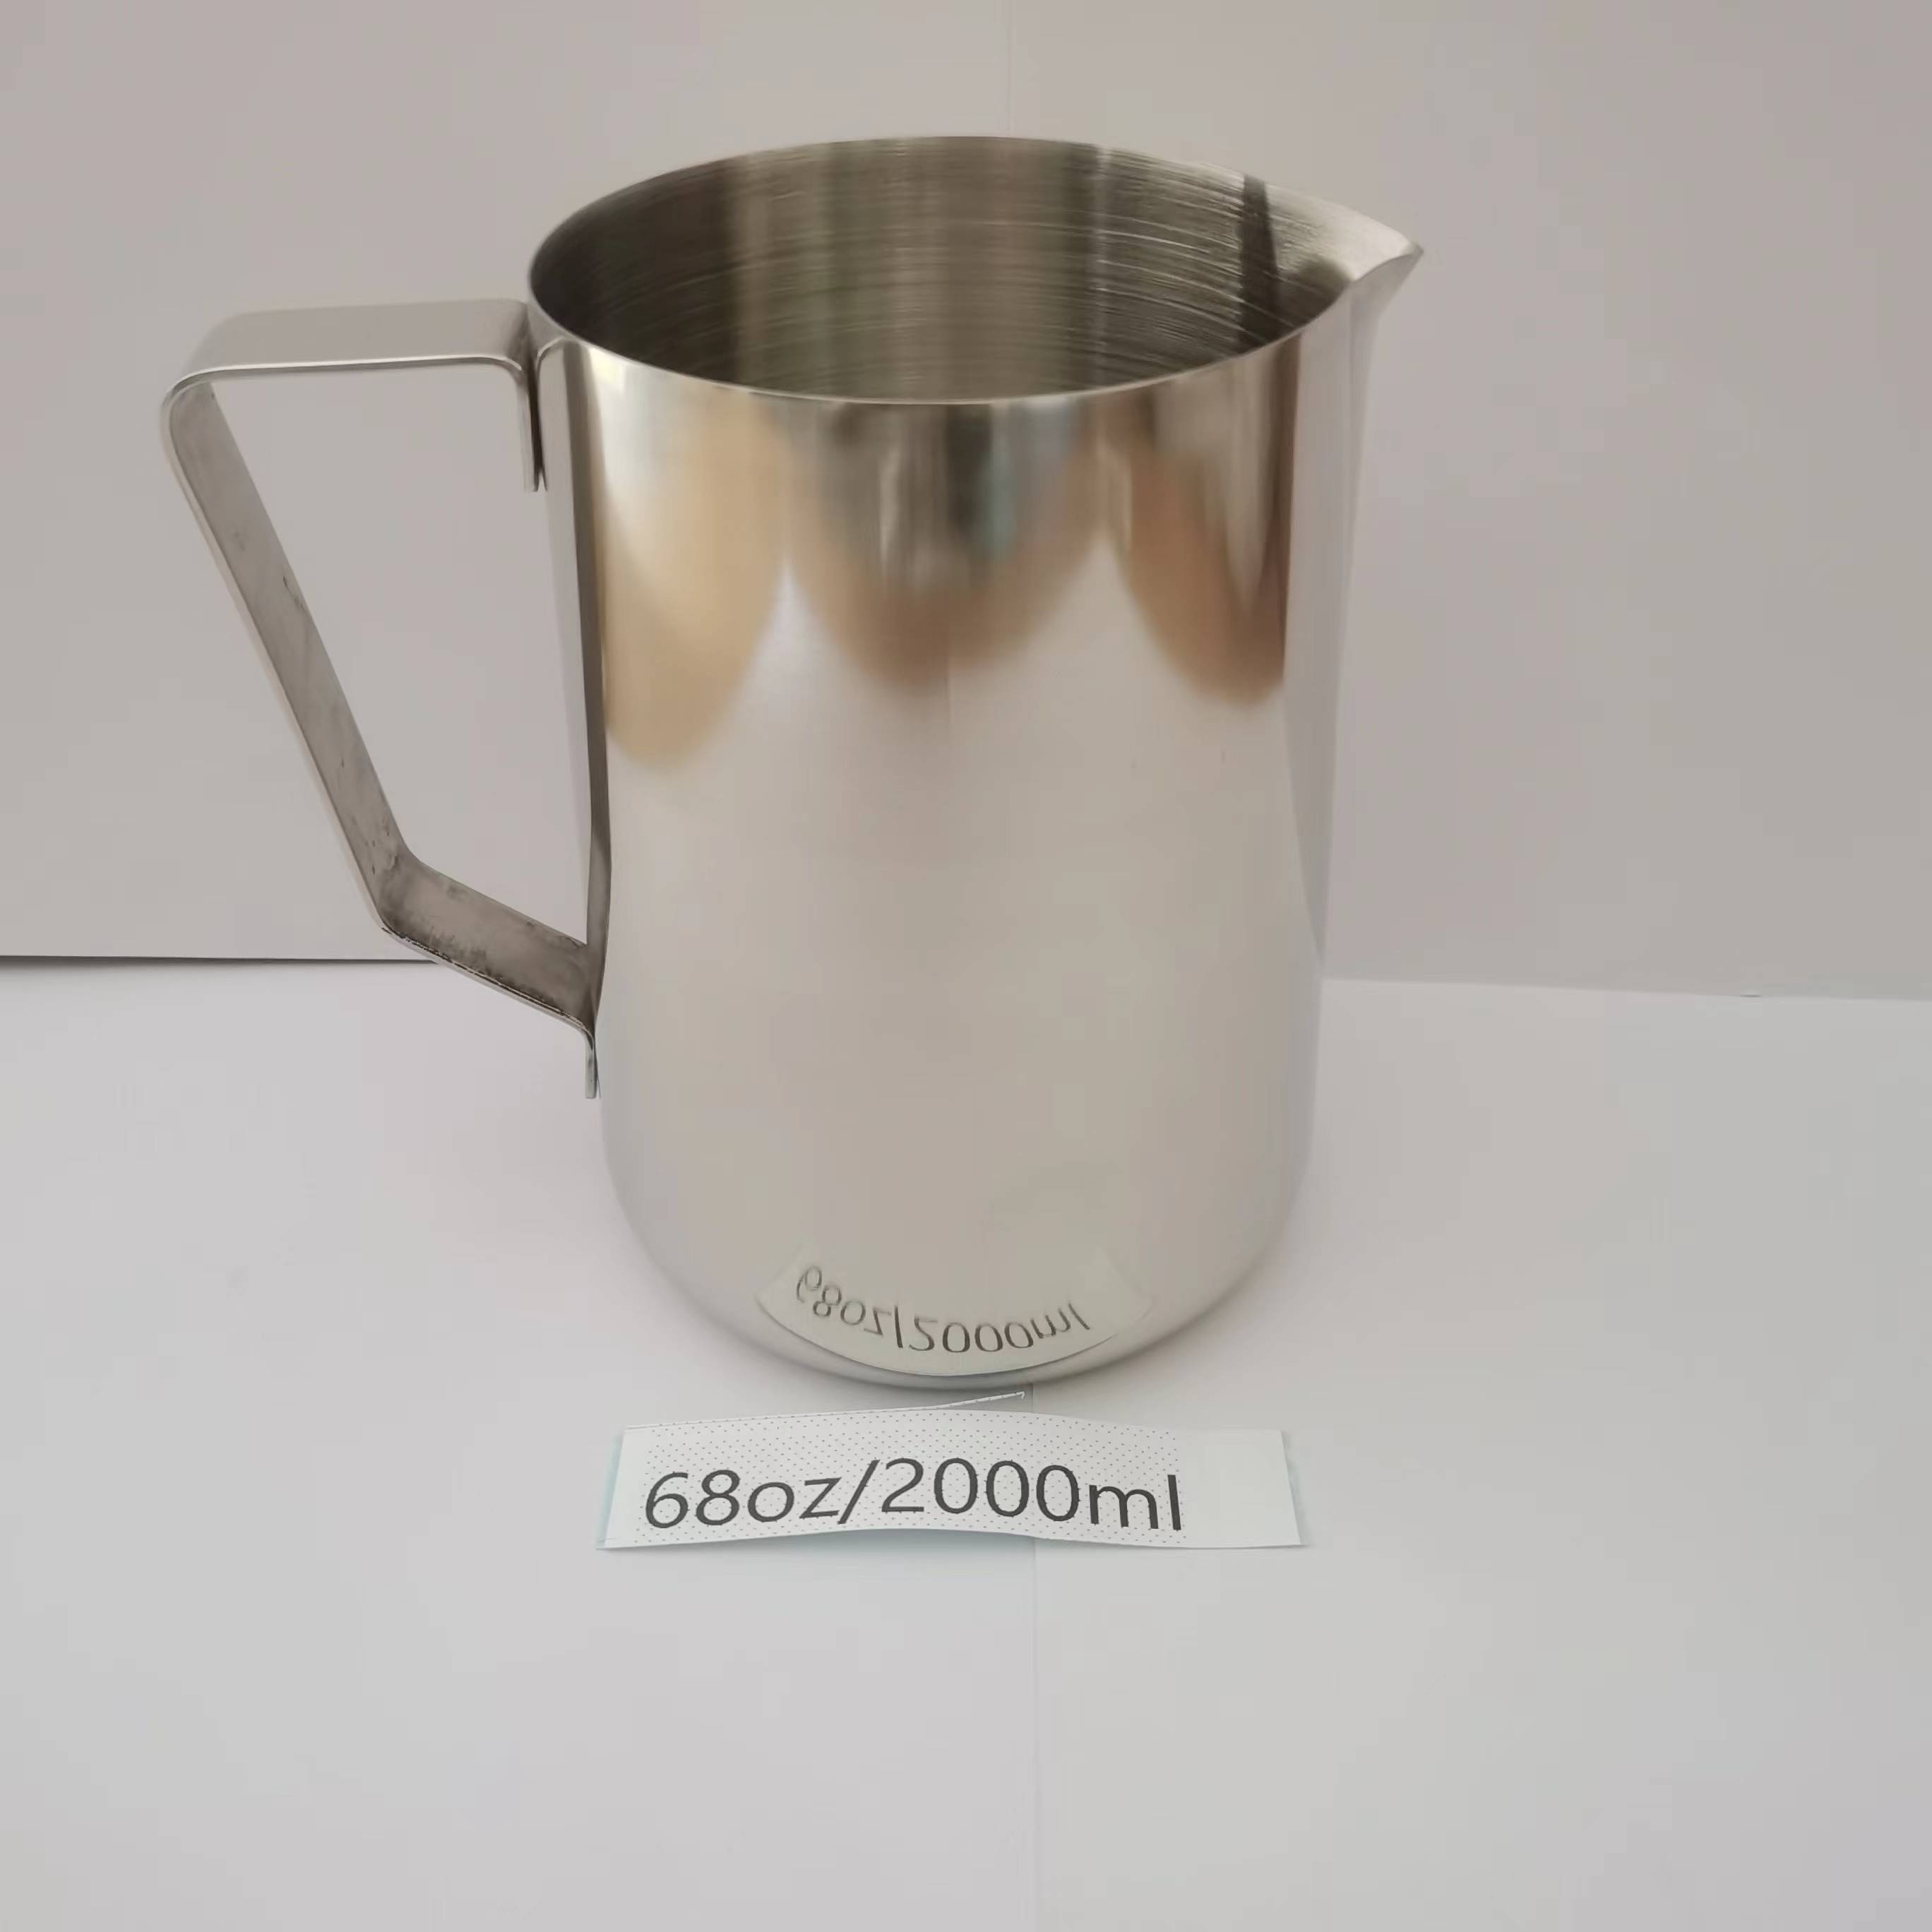 Stainless Steel Espresso Coffee Pitcher Craft Latte Milk Frothing Jug Mugs  150ML,350ML,600ML,1000ML 